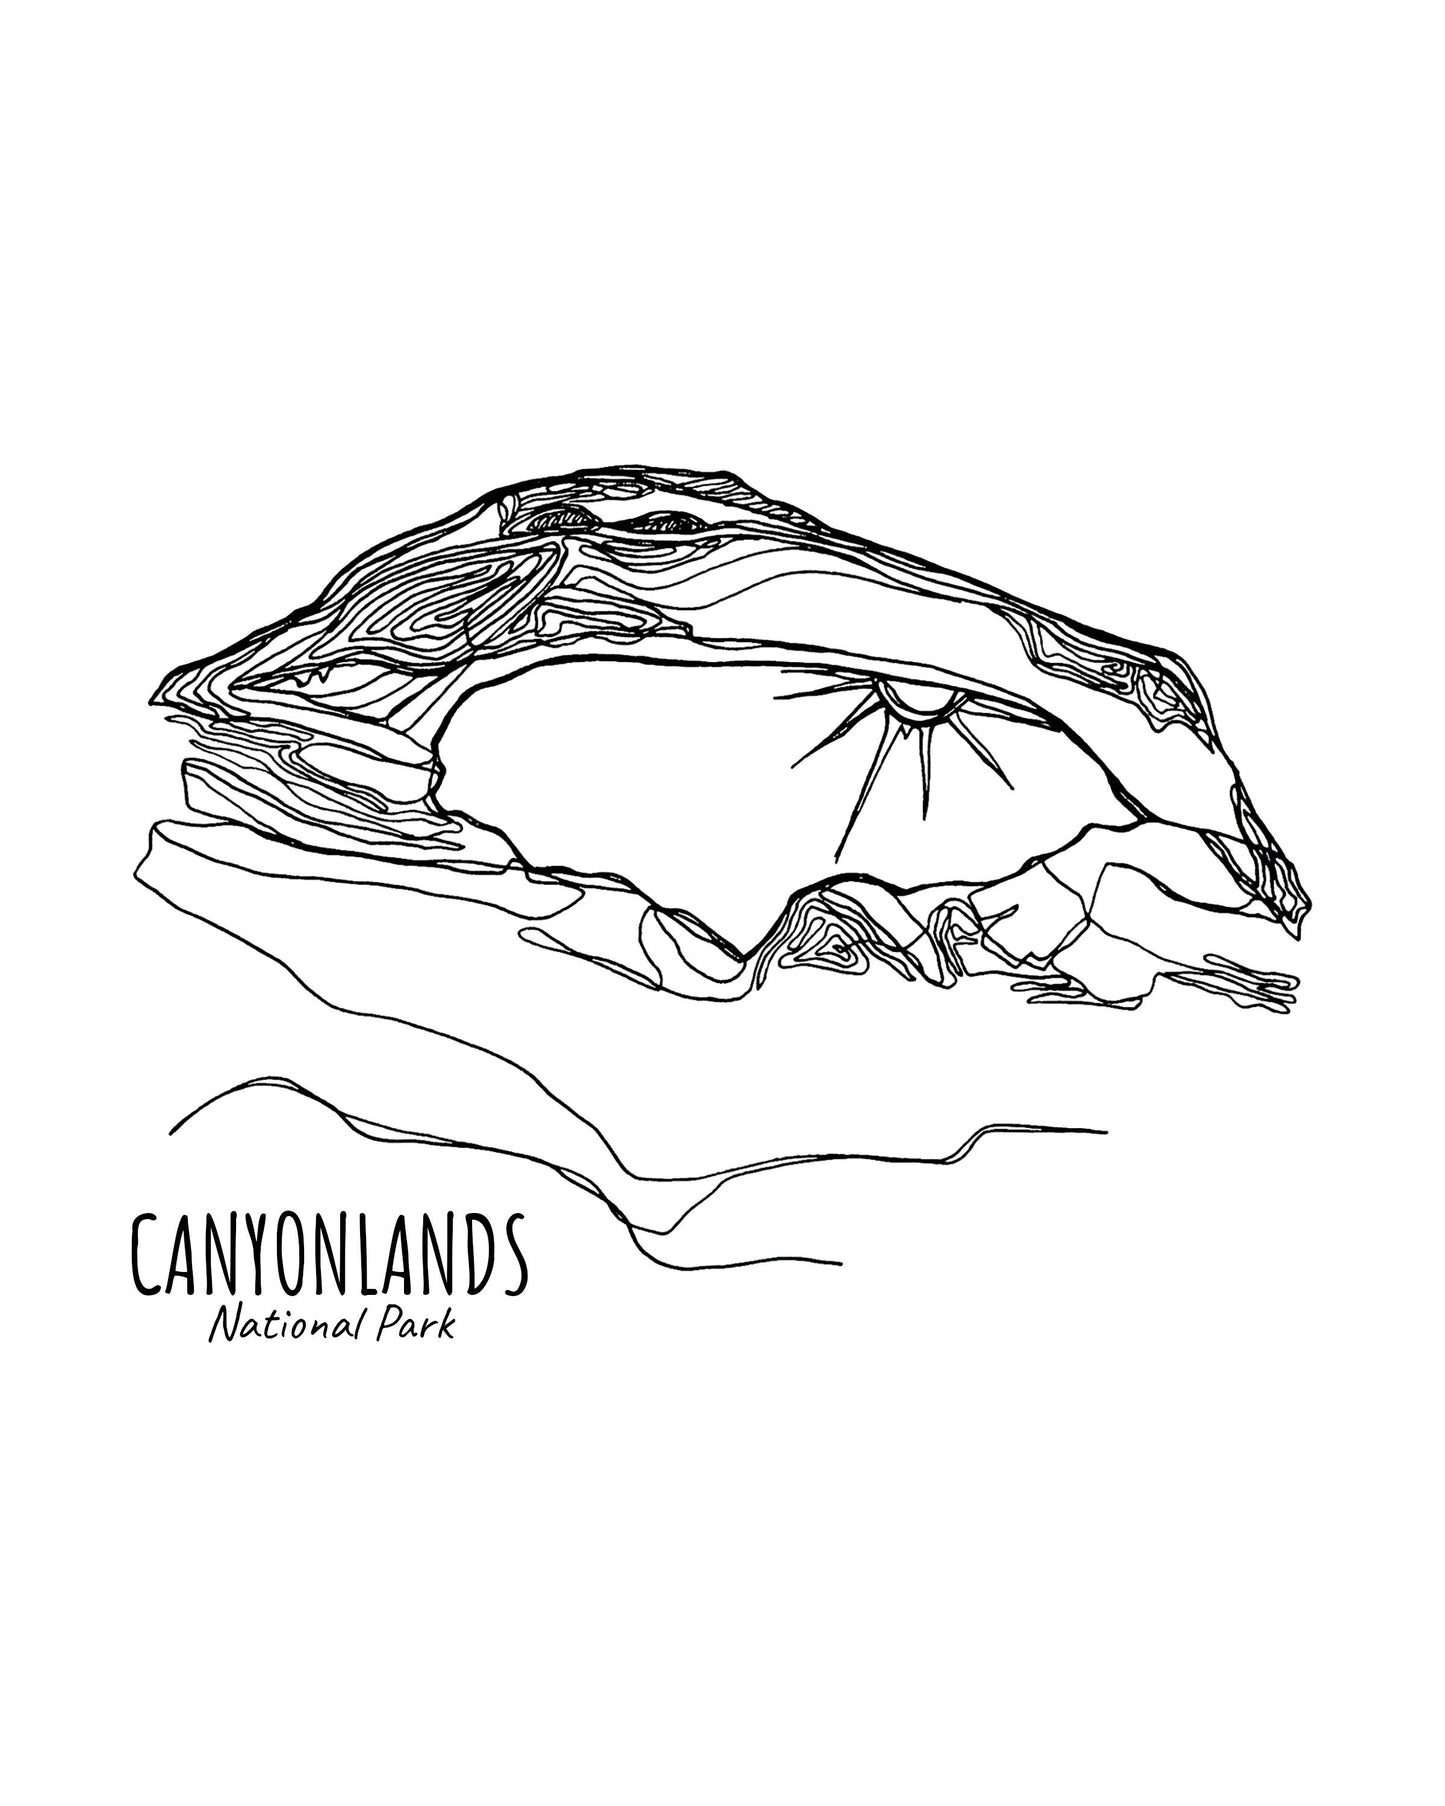 Canyonlands National Park, Utah Continuous Line Print